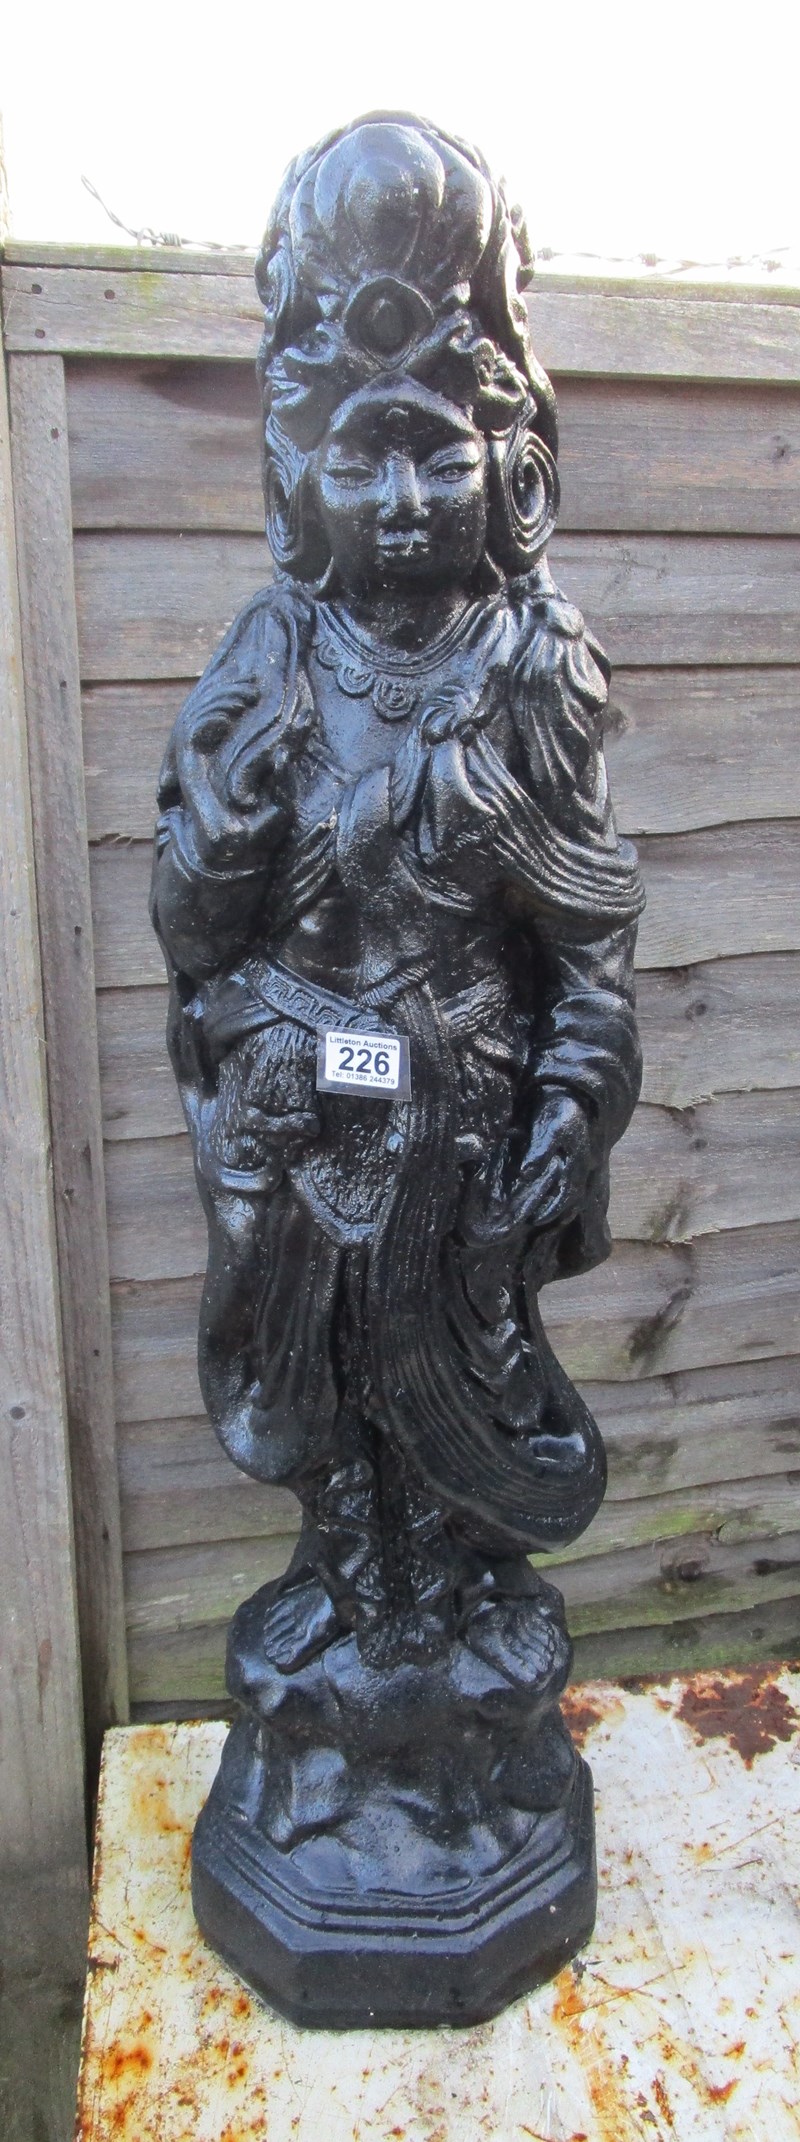 Stone lady figure ornament